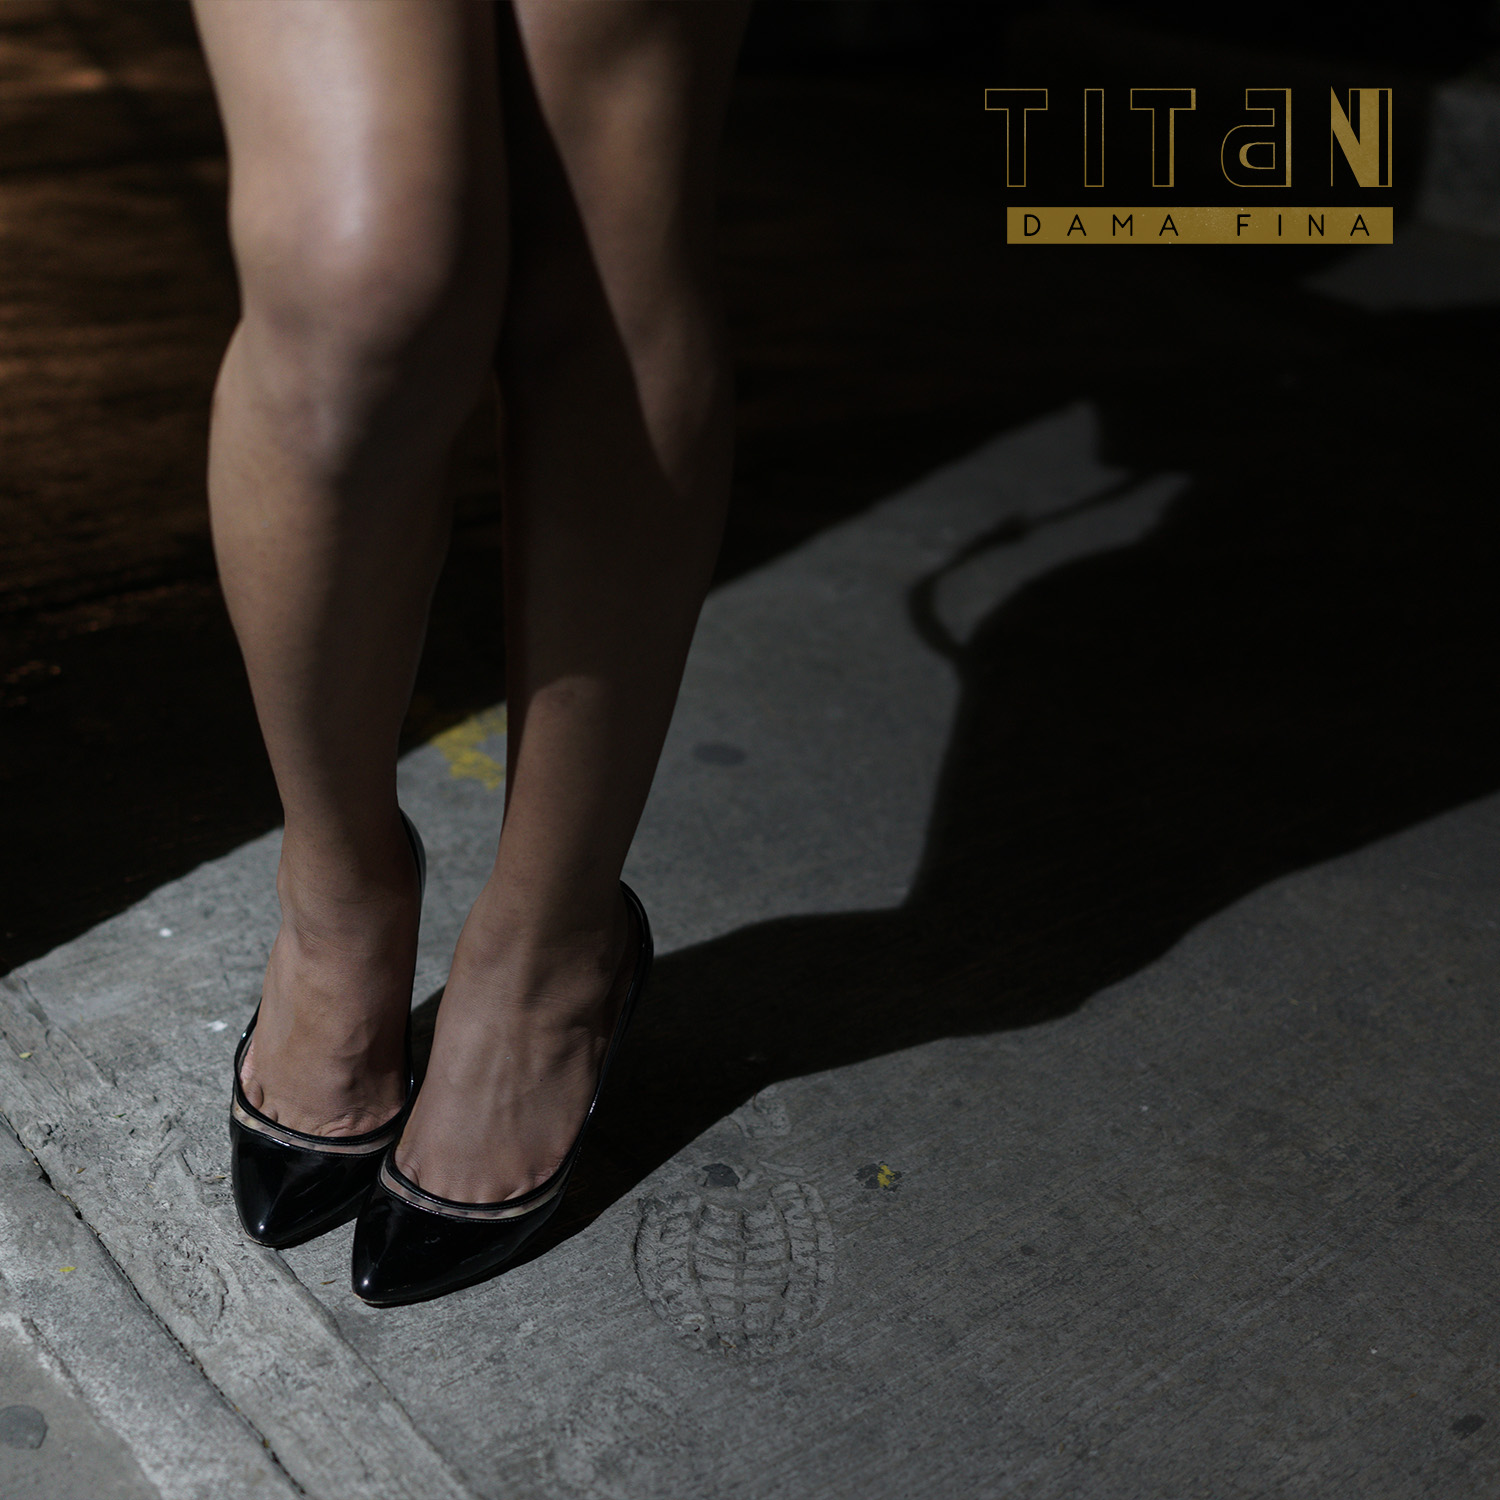 Titan estrena el sencillo “Dama Fina”